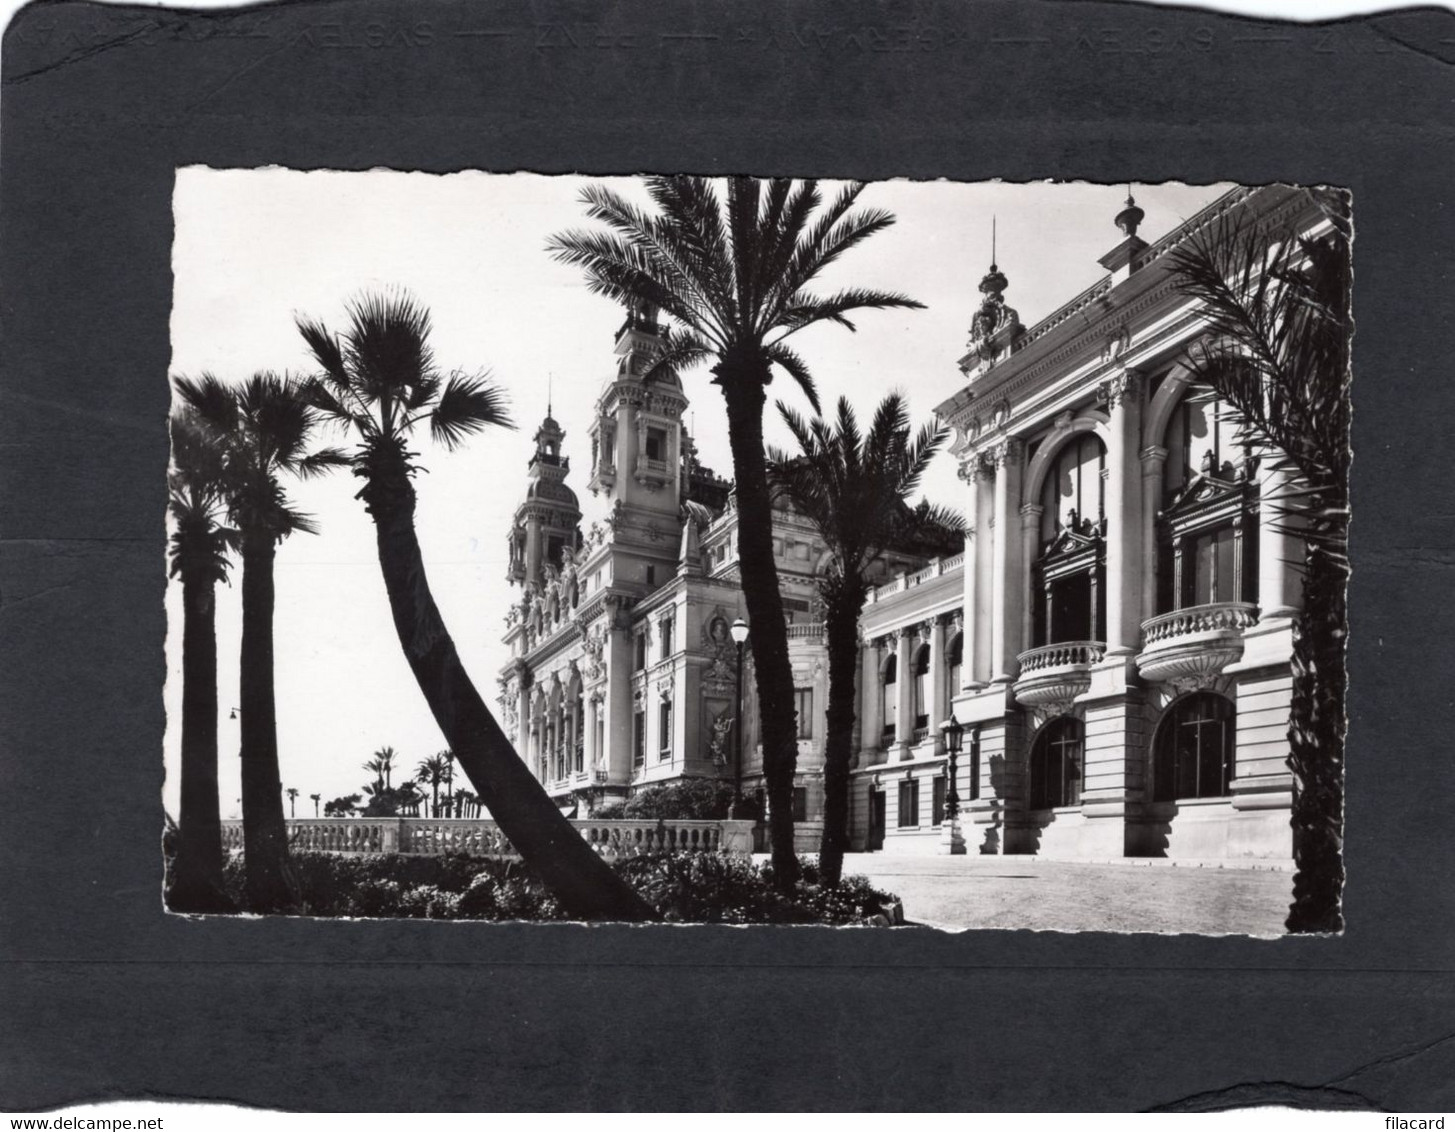 98241    Monaco,   Monte-Carlo,  Le  Theatre  Et Les Terrasses,  VG  1954 - Opernhaus & Theater